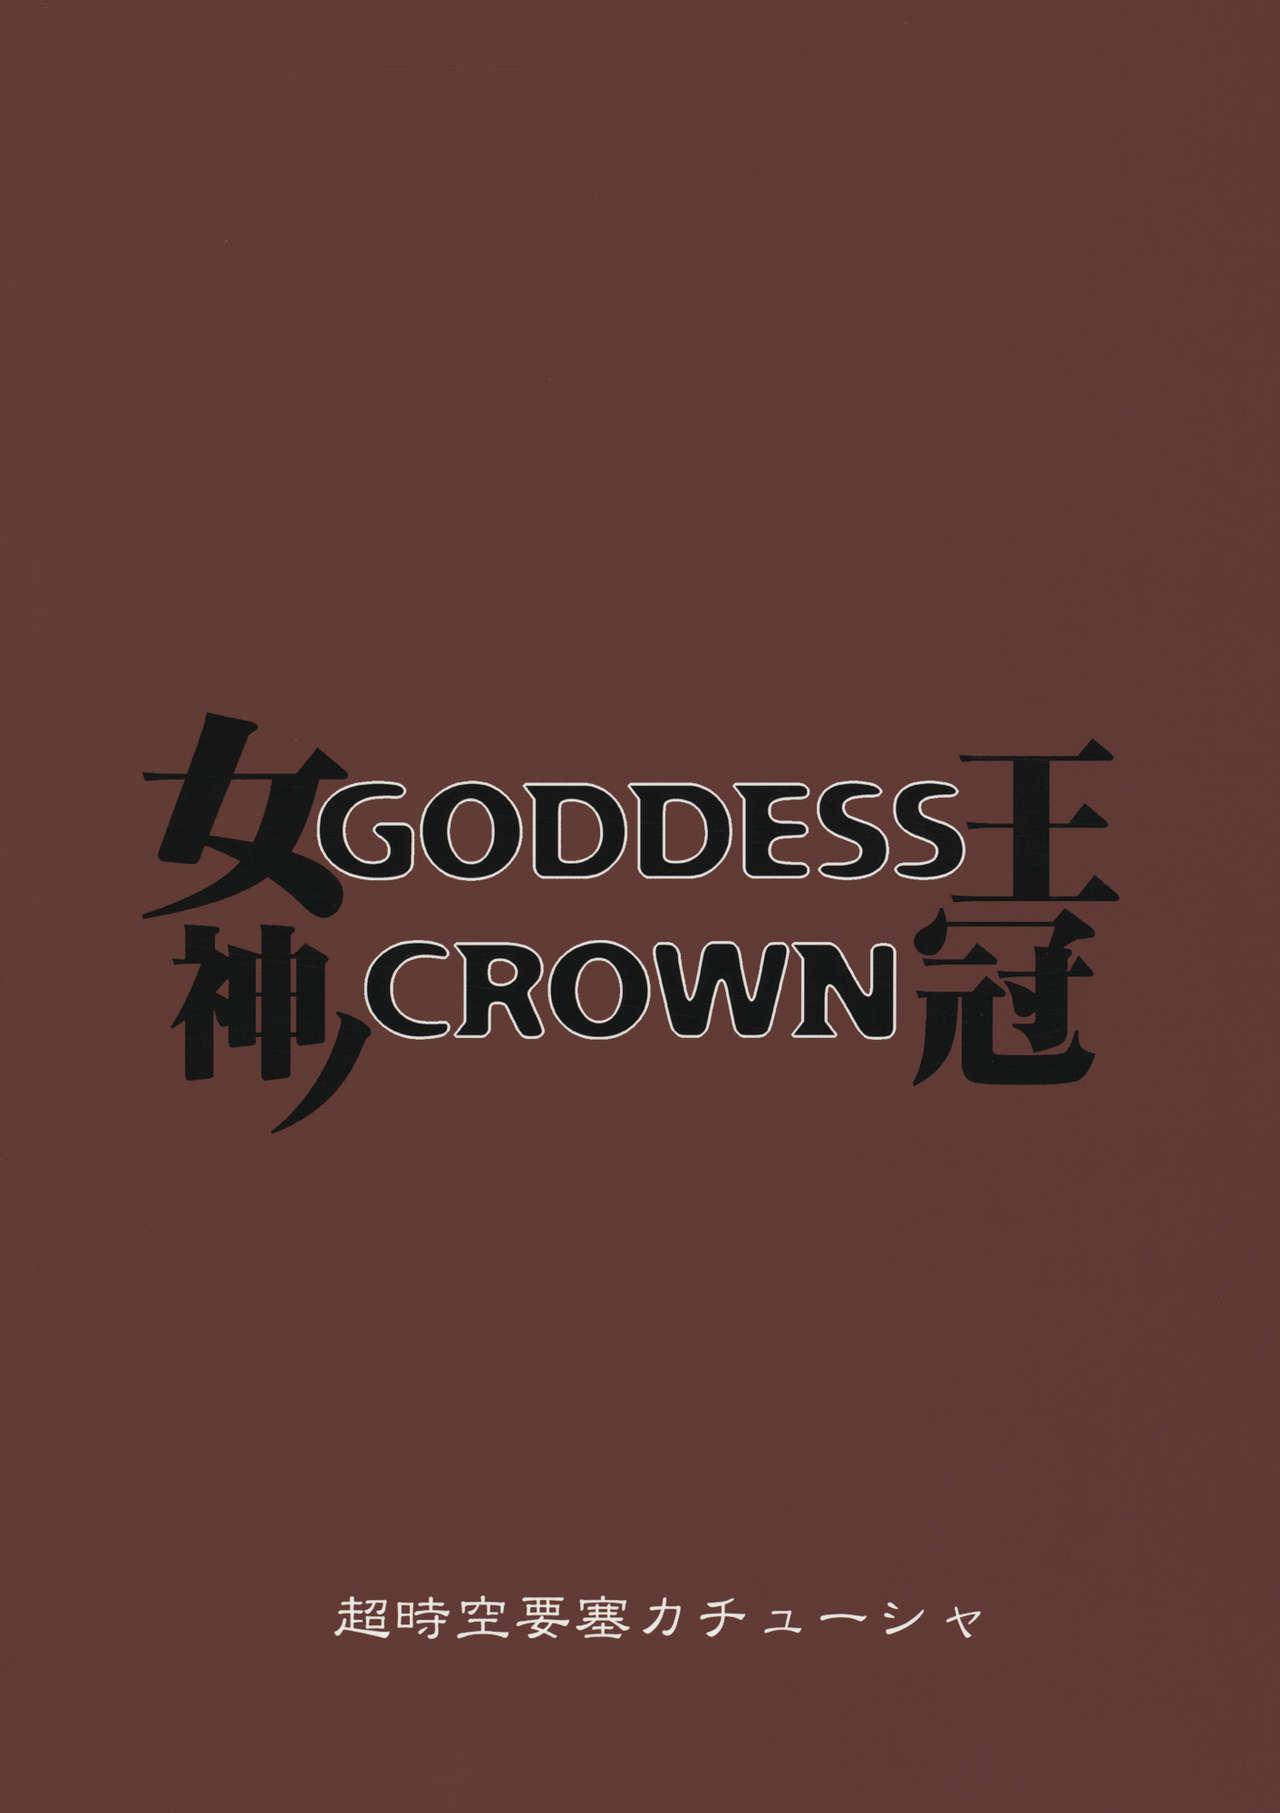 Olderwoman GODDESS CROWN - Dragons crown Nylons - Page 26